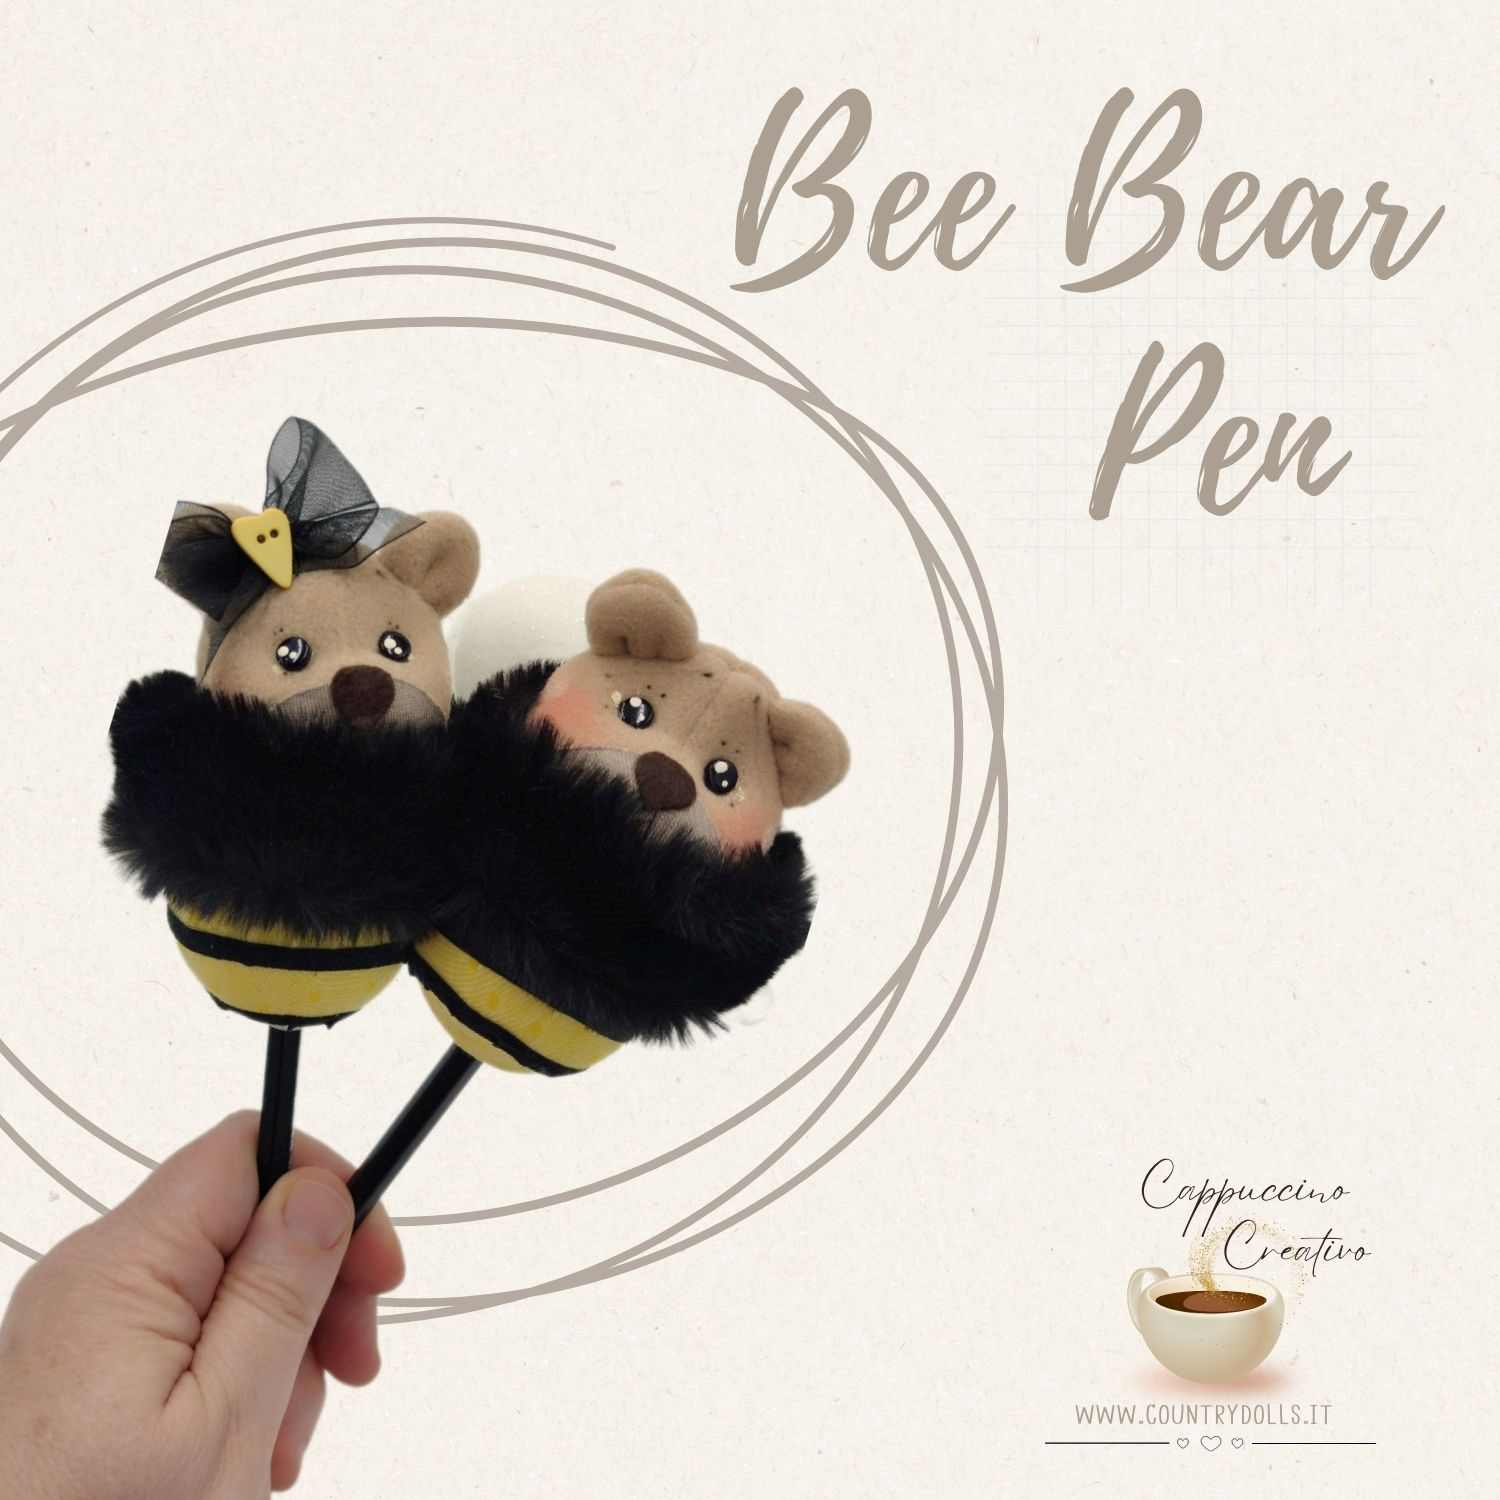 Bee Bear Pen , la matita a forma di ape